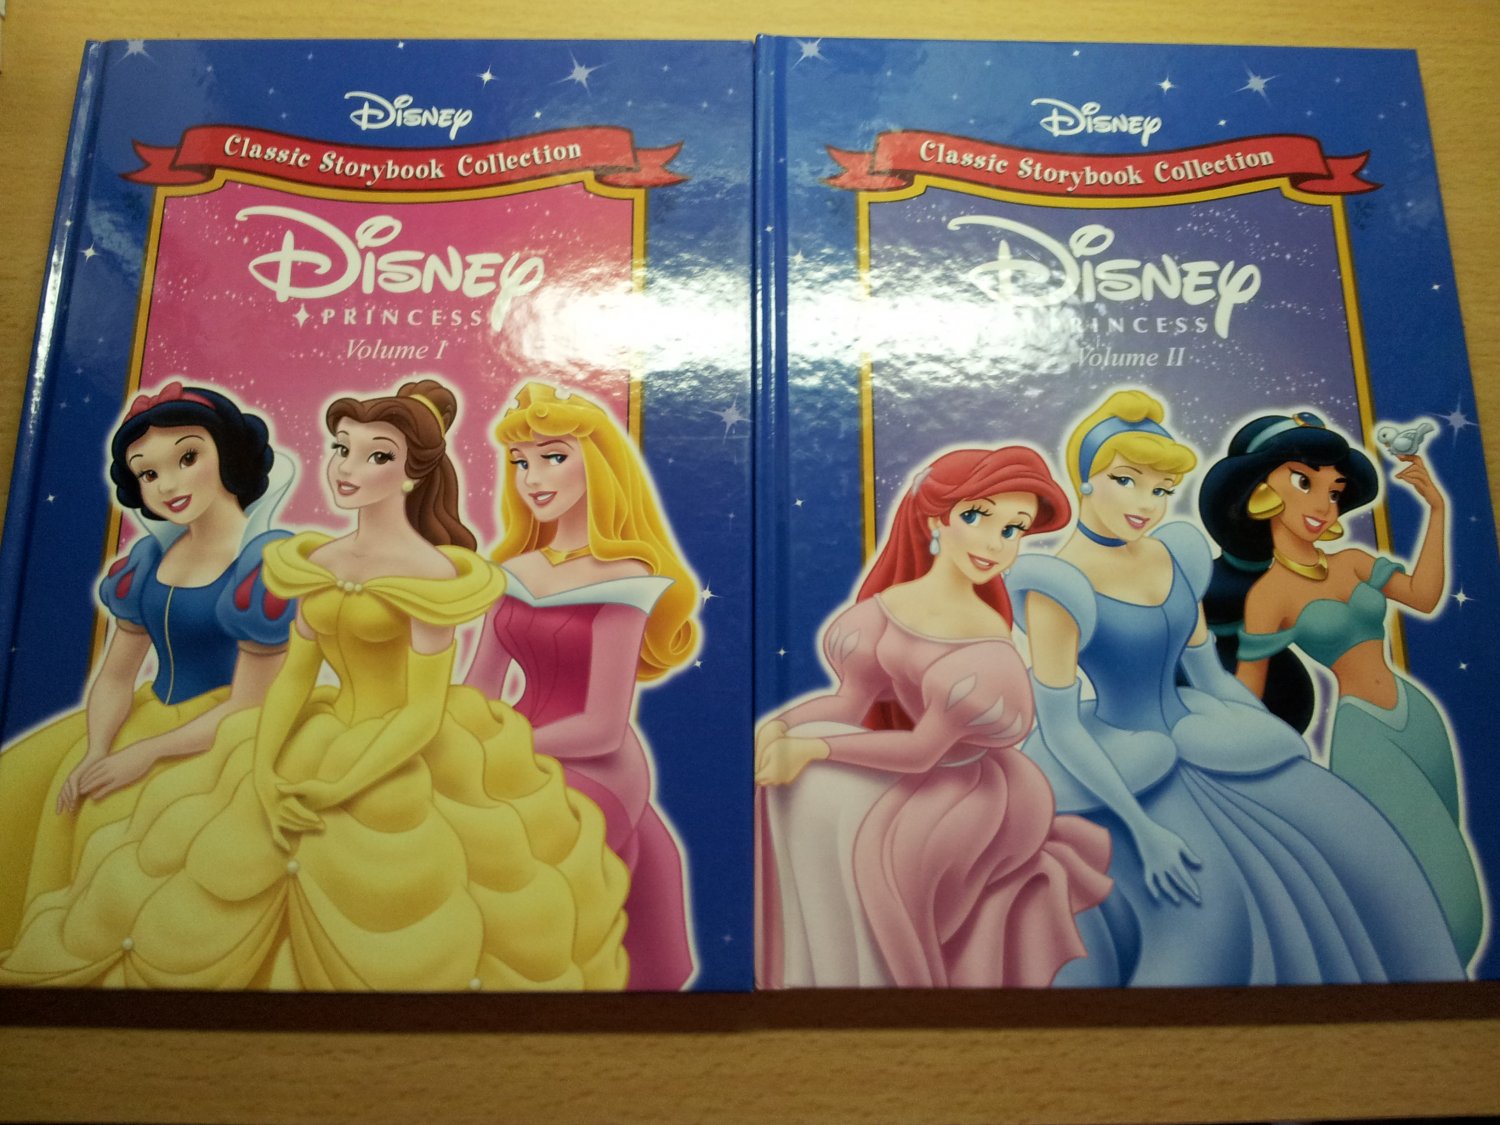 Classic Storybook Collection - Disney Princess Volume II